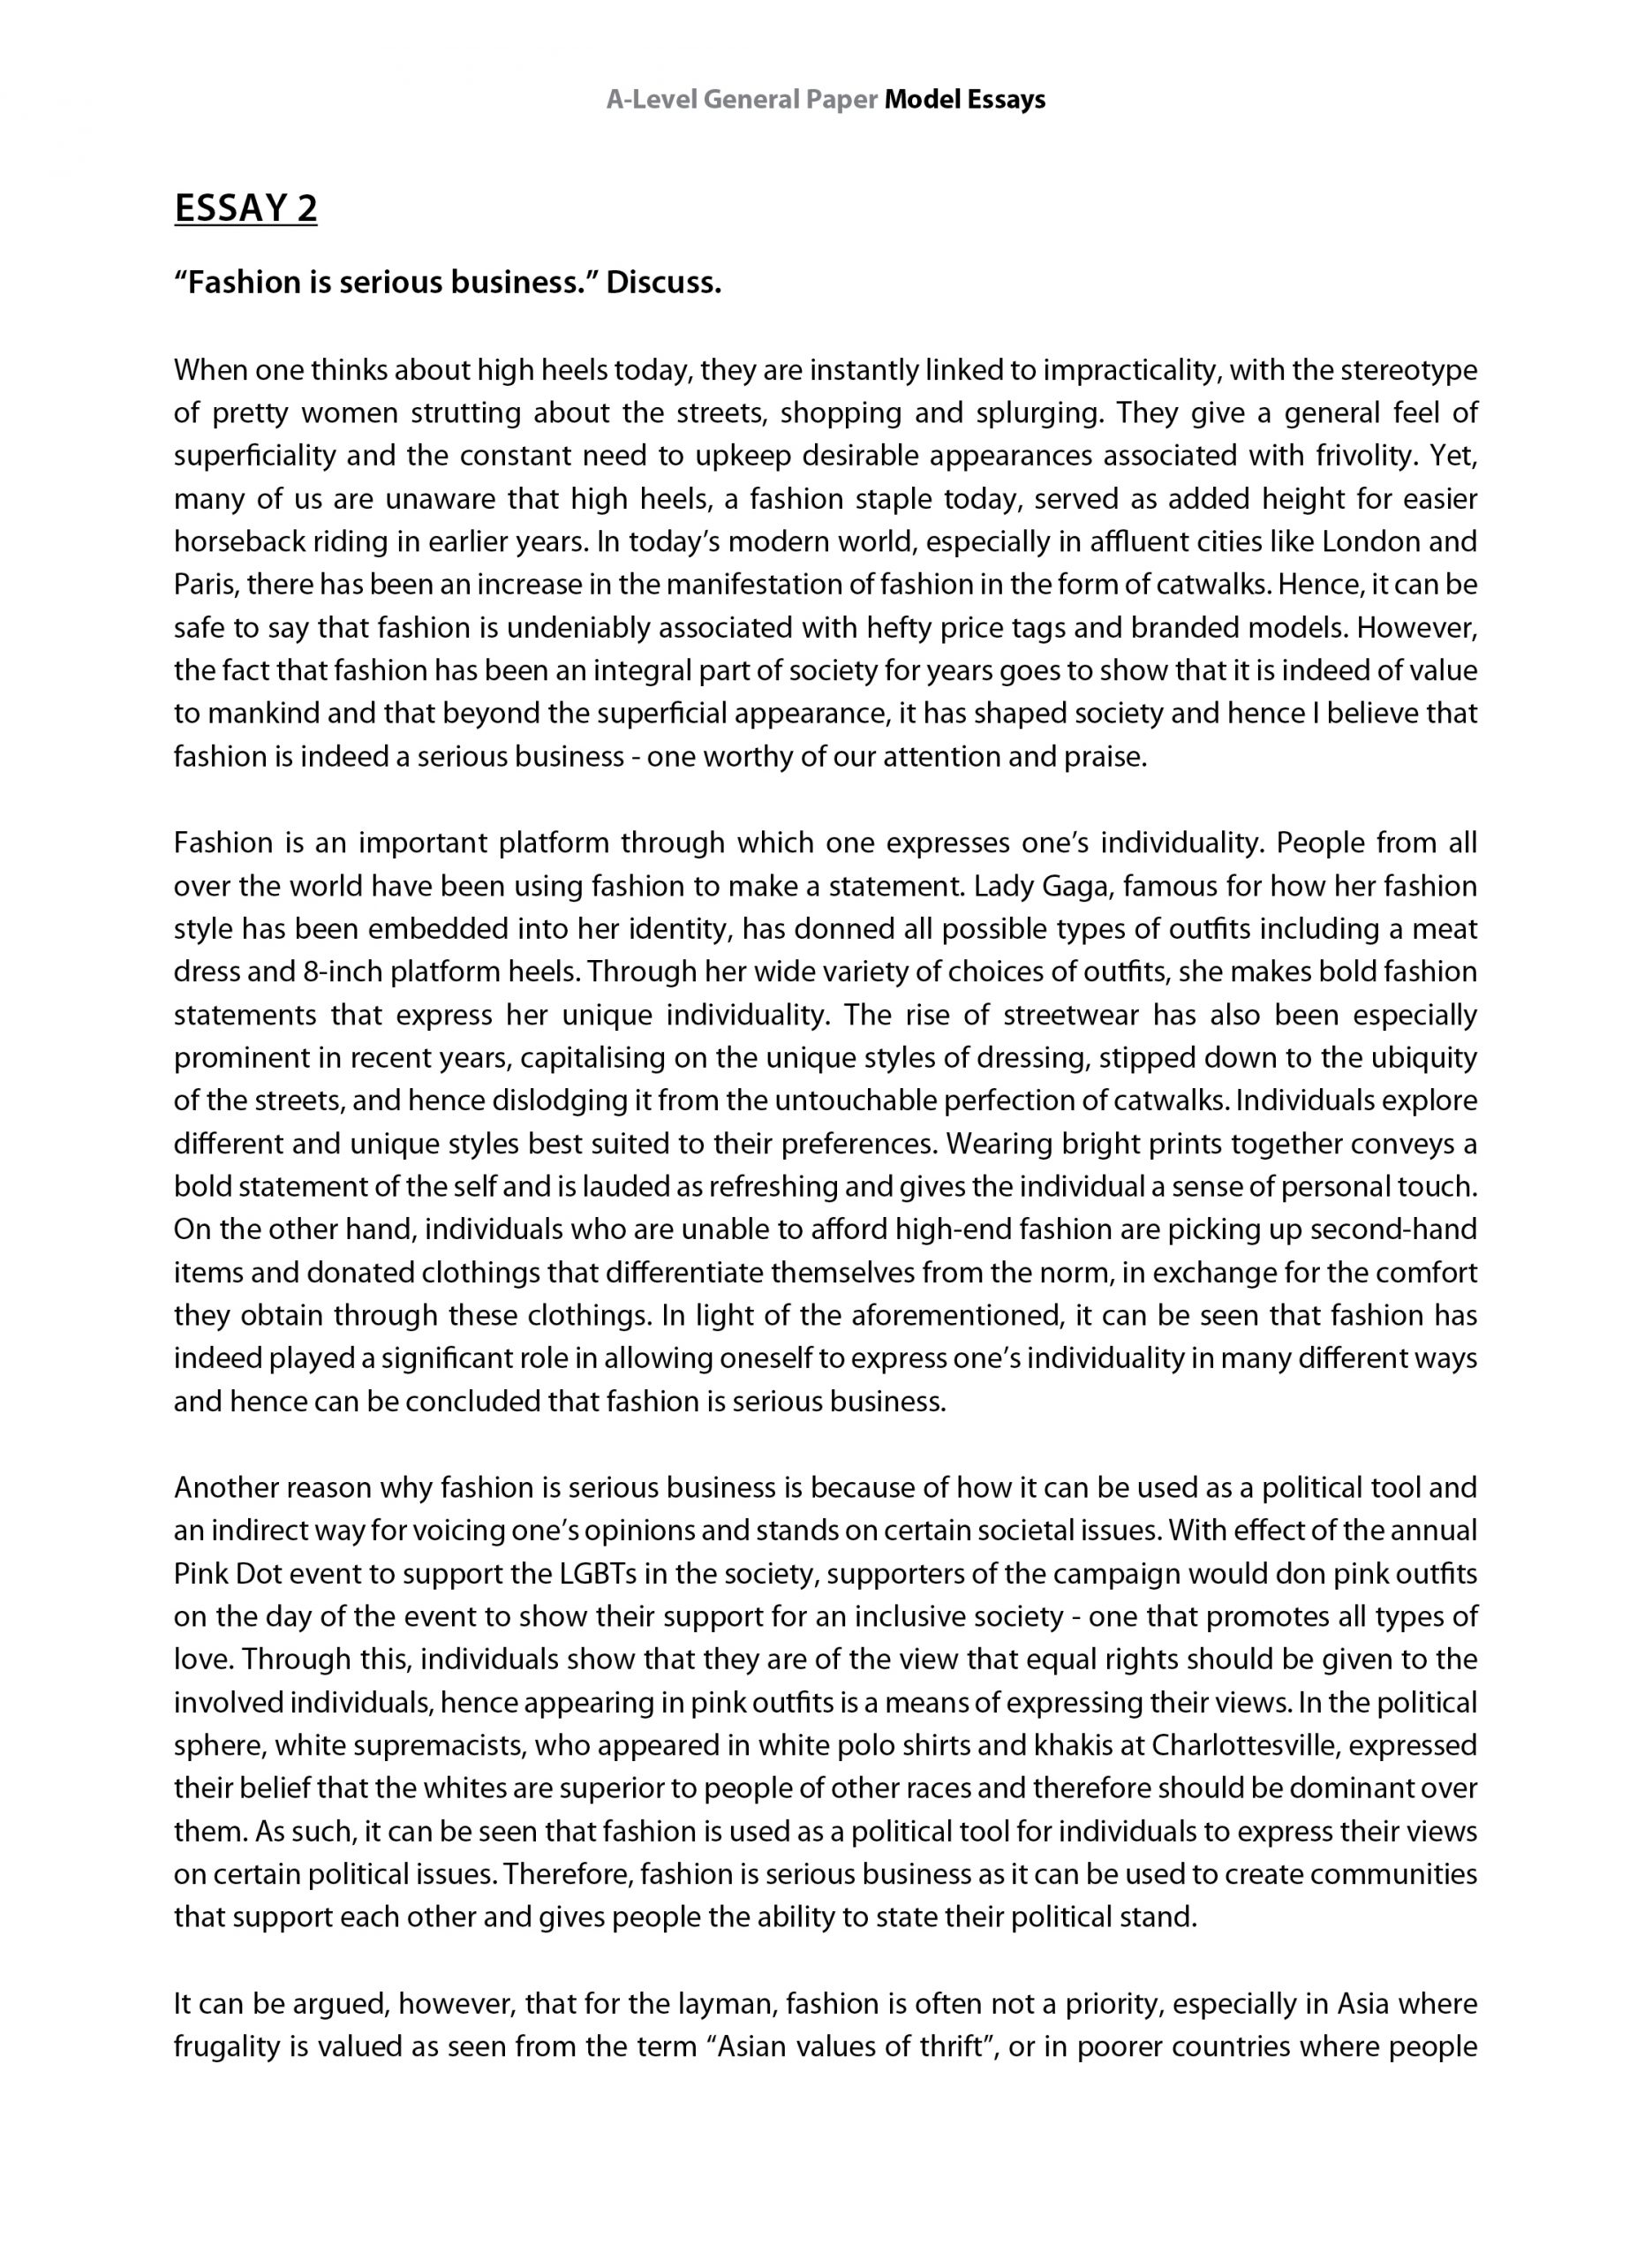 model essays 3 pdf download